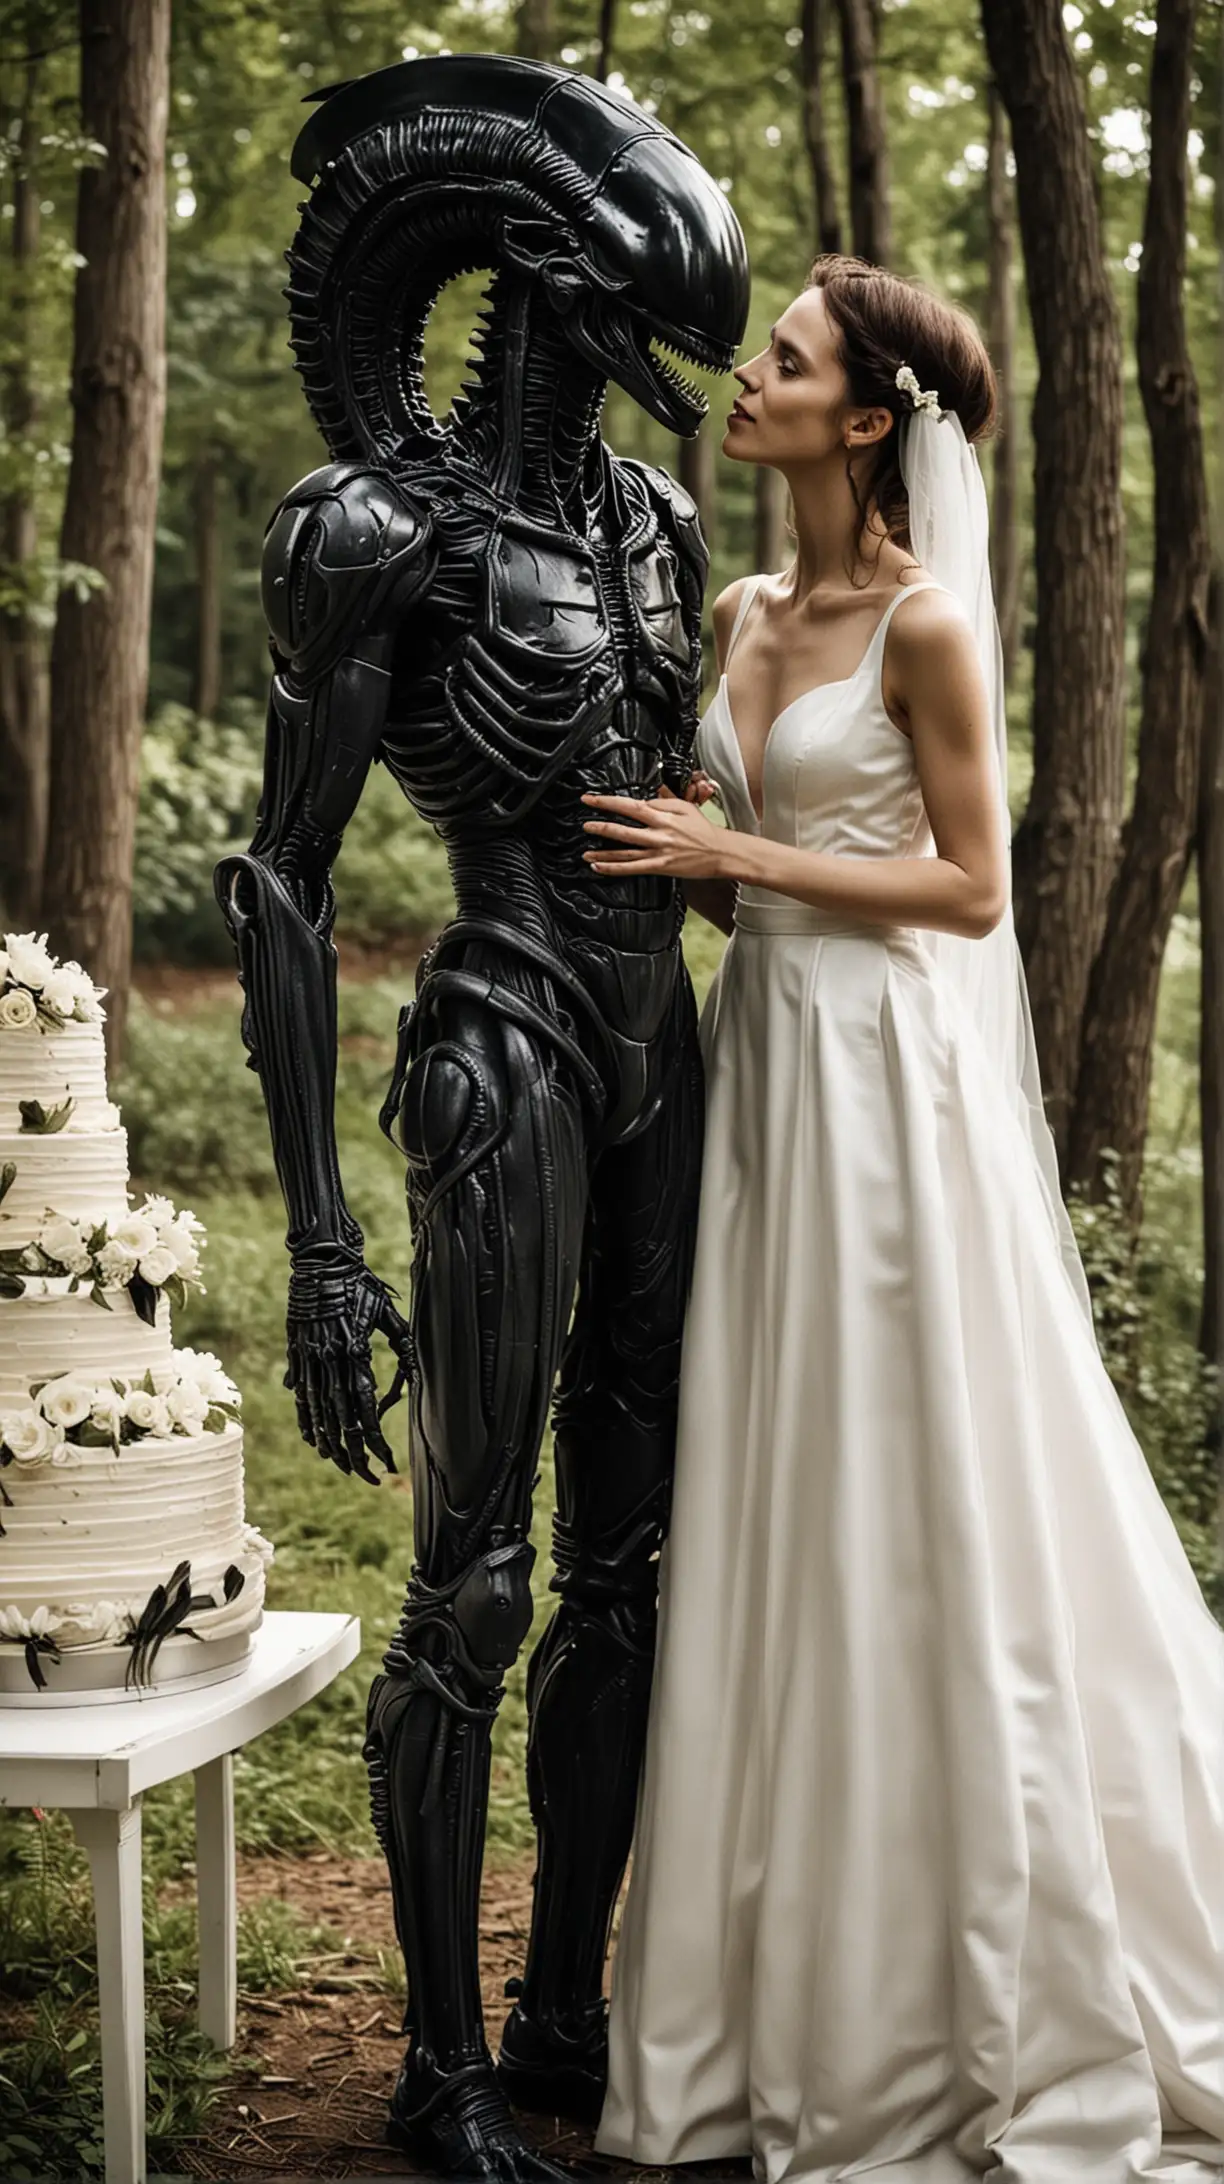 Imagine Xenomorph on a wedding 